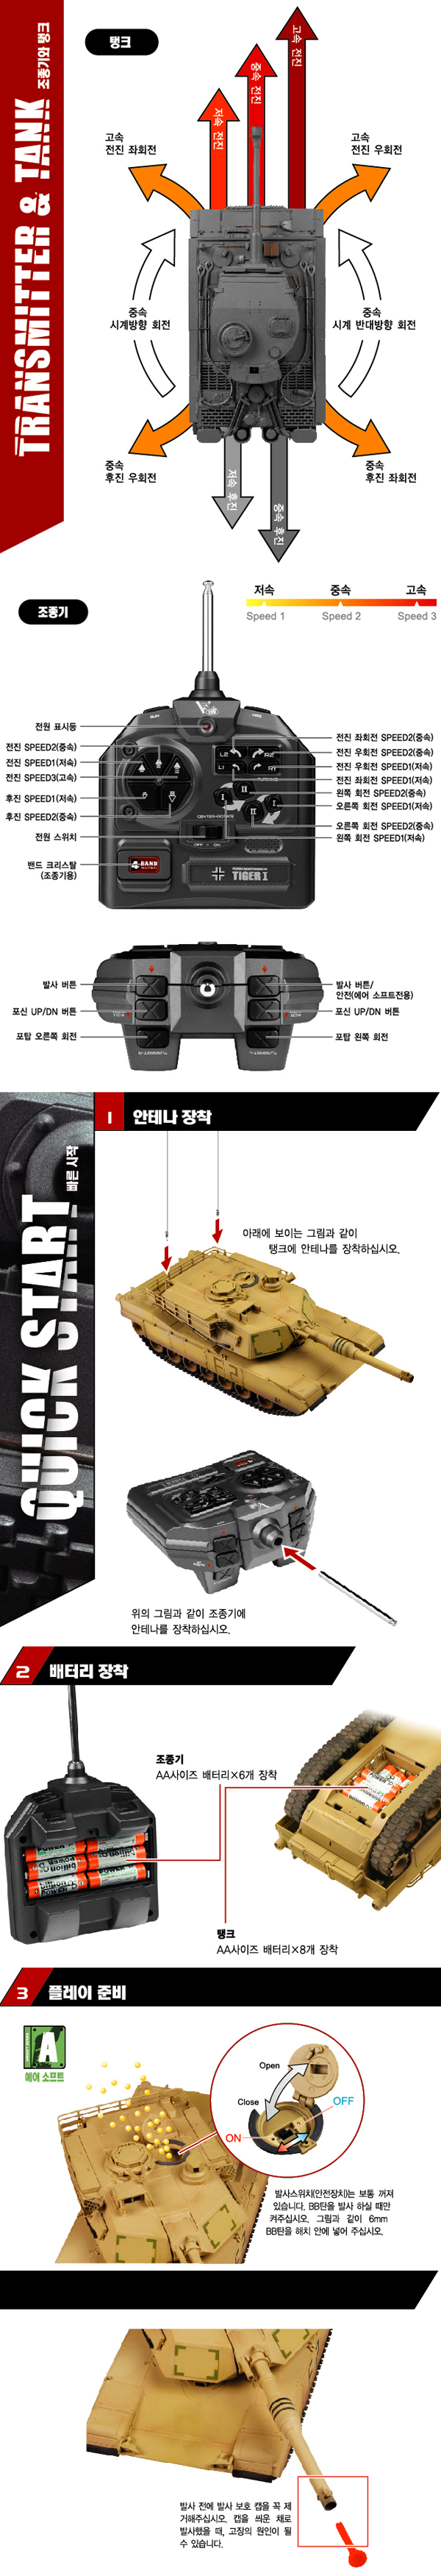 tank1 image.jpg